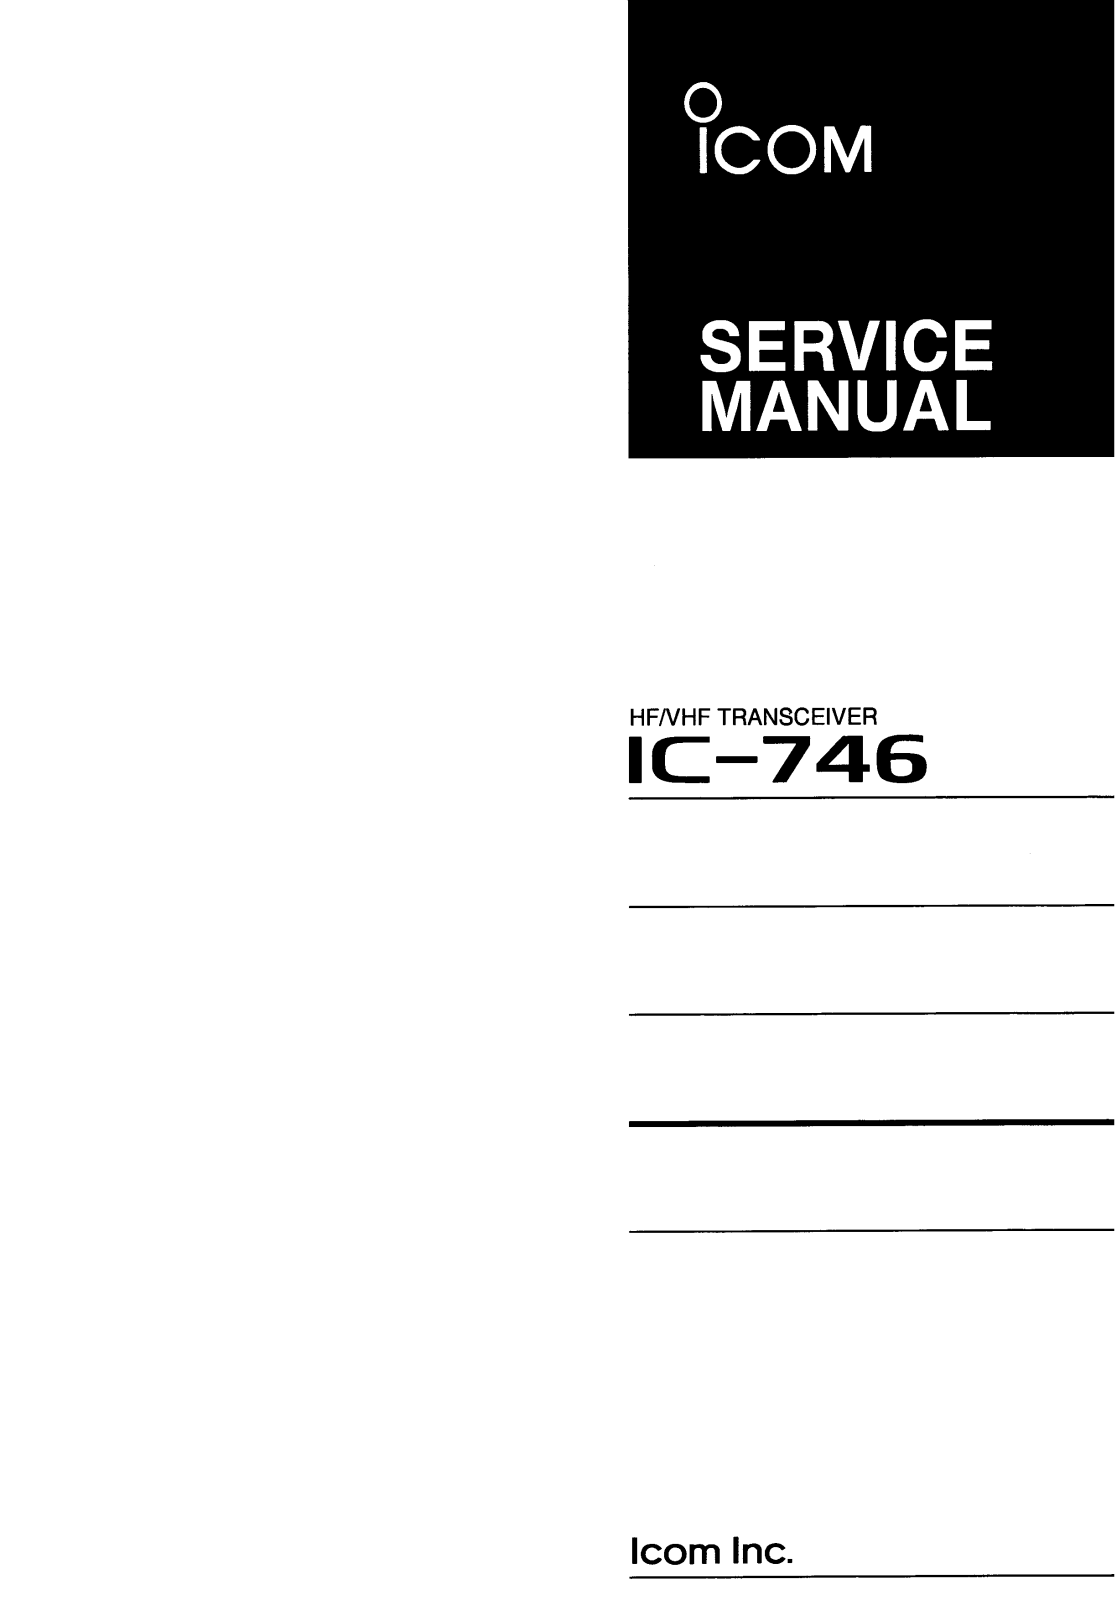 Icom IC-746 Service Manual